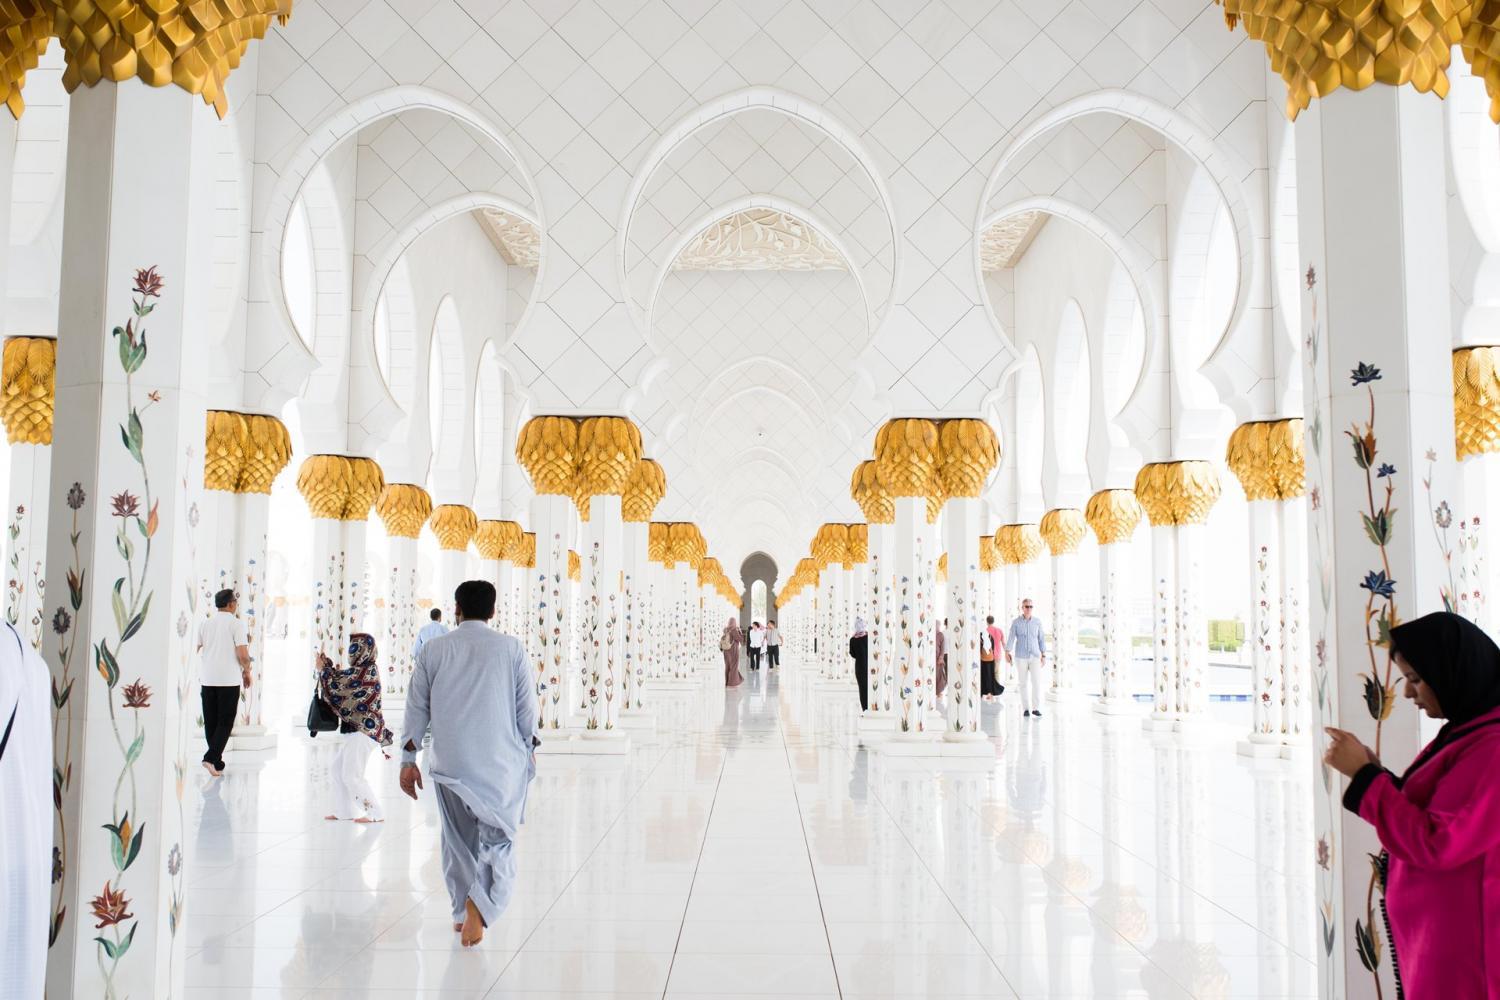 Abu-Dhabi-Mosque-&-Louvre-Museum-from-Dubai-8